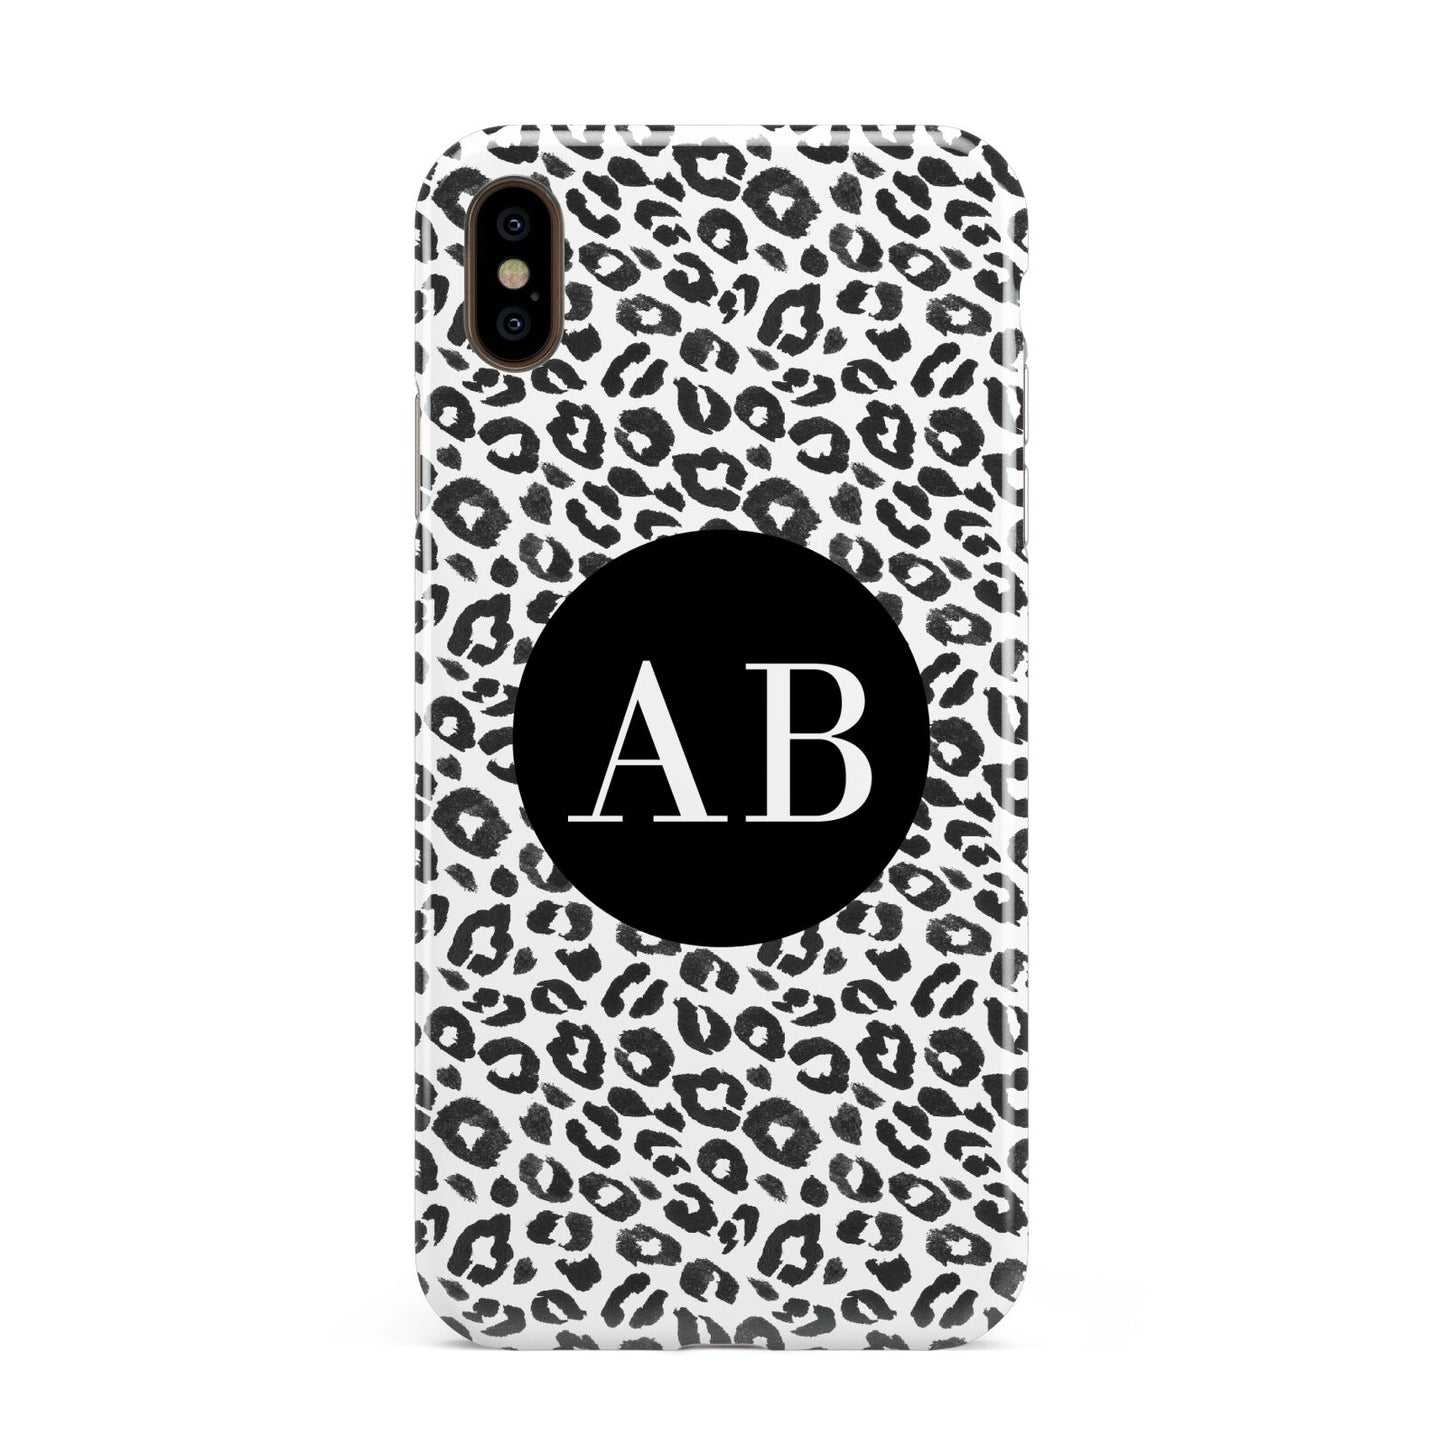 Leopard Print Black and White Apple iPhone Xs Max 3D Tough Case